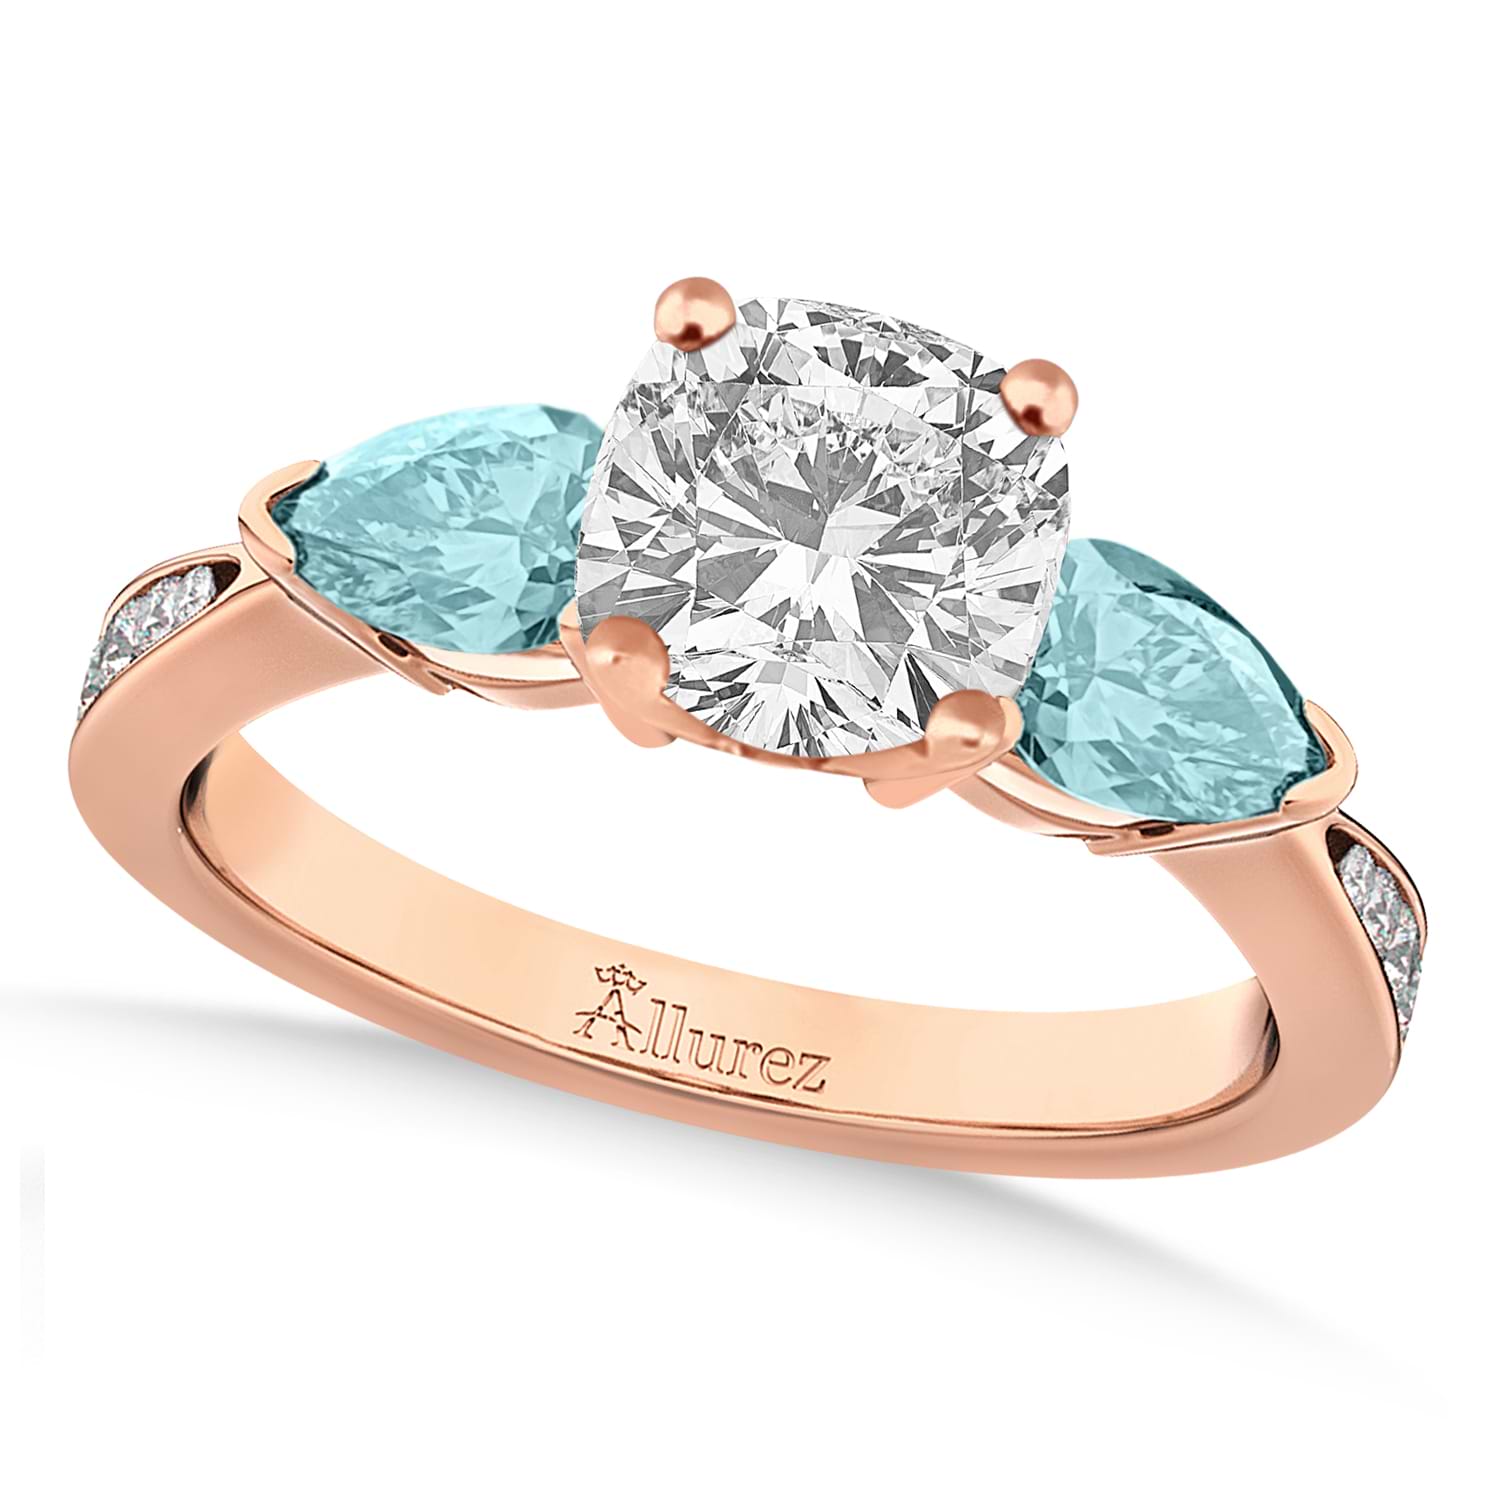 Cushion Diamond & Pear Aquamarine Engagement Ring 18k Rose Gold (1.79ct)